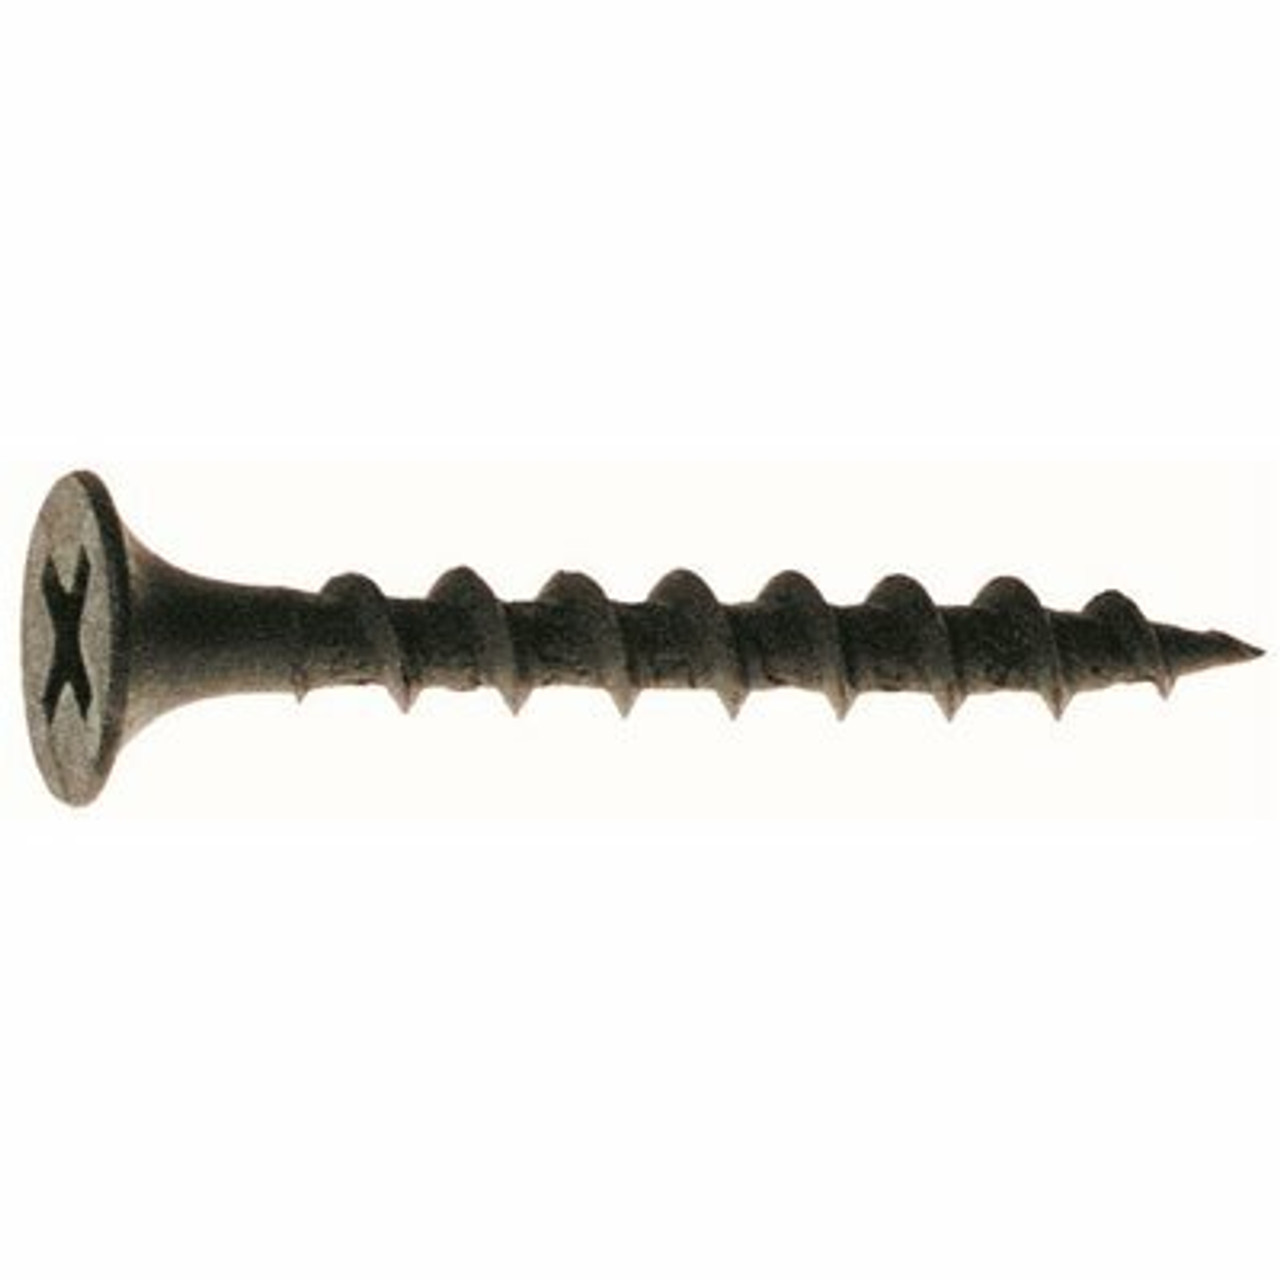 Grip-Rite #6 X 1-1/4 In. Philips Bugle-Head Coarse Thread Sharp (5 Lb./Pack)